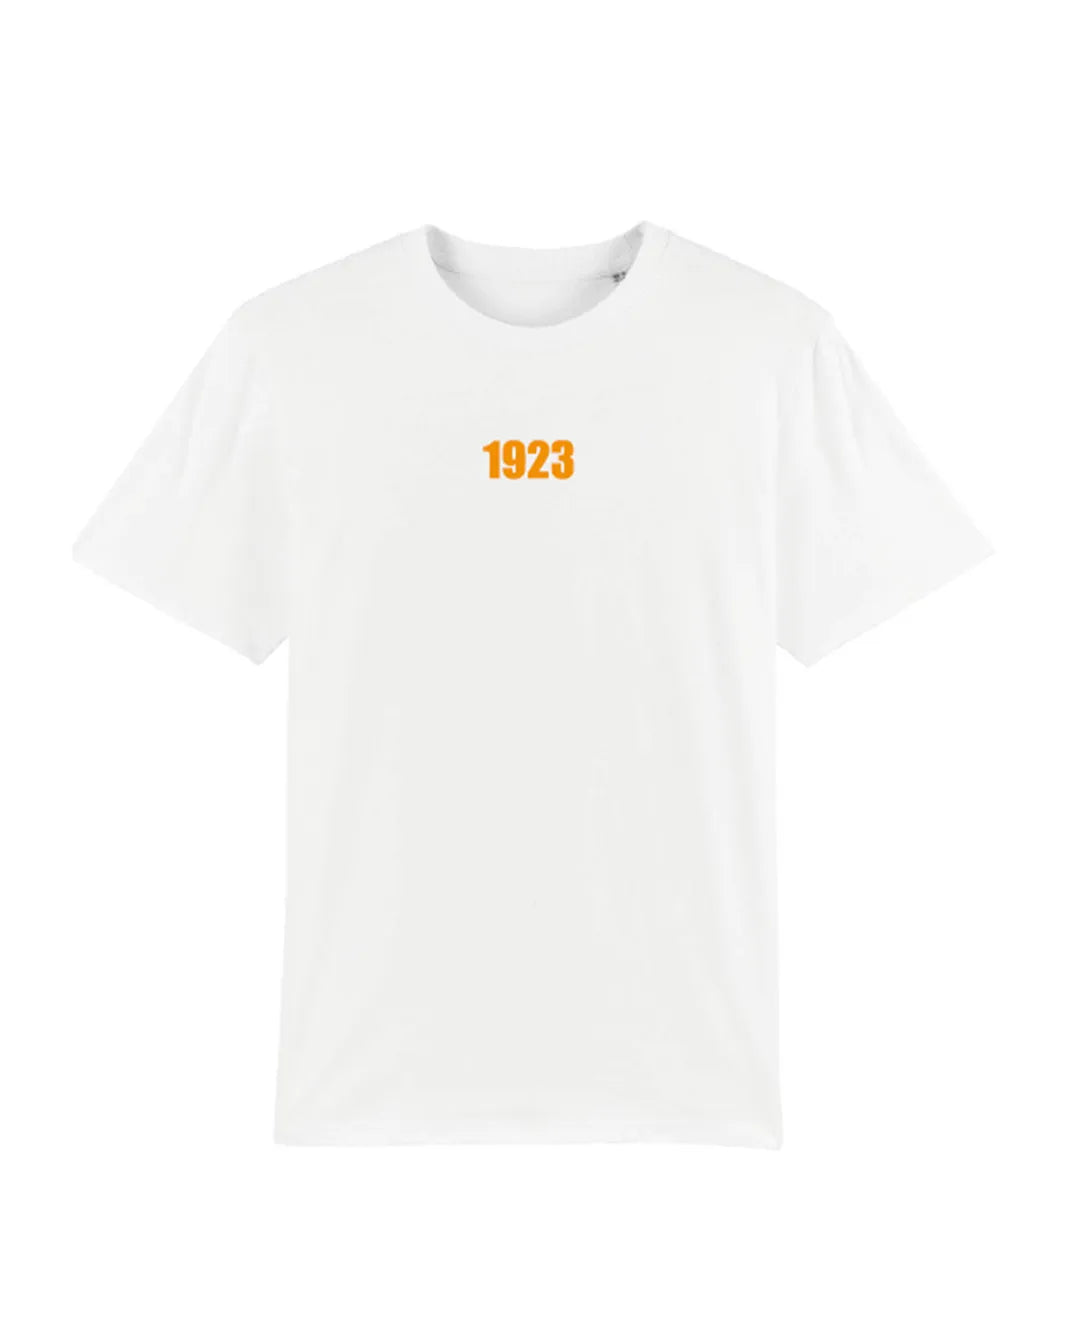 T-Shirt Ludwig-Meyn-Gymnasium Uetersen 1923